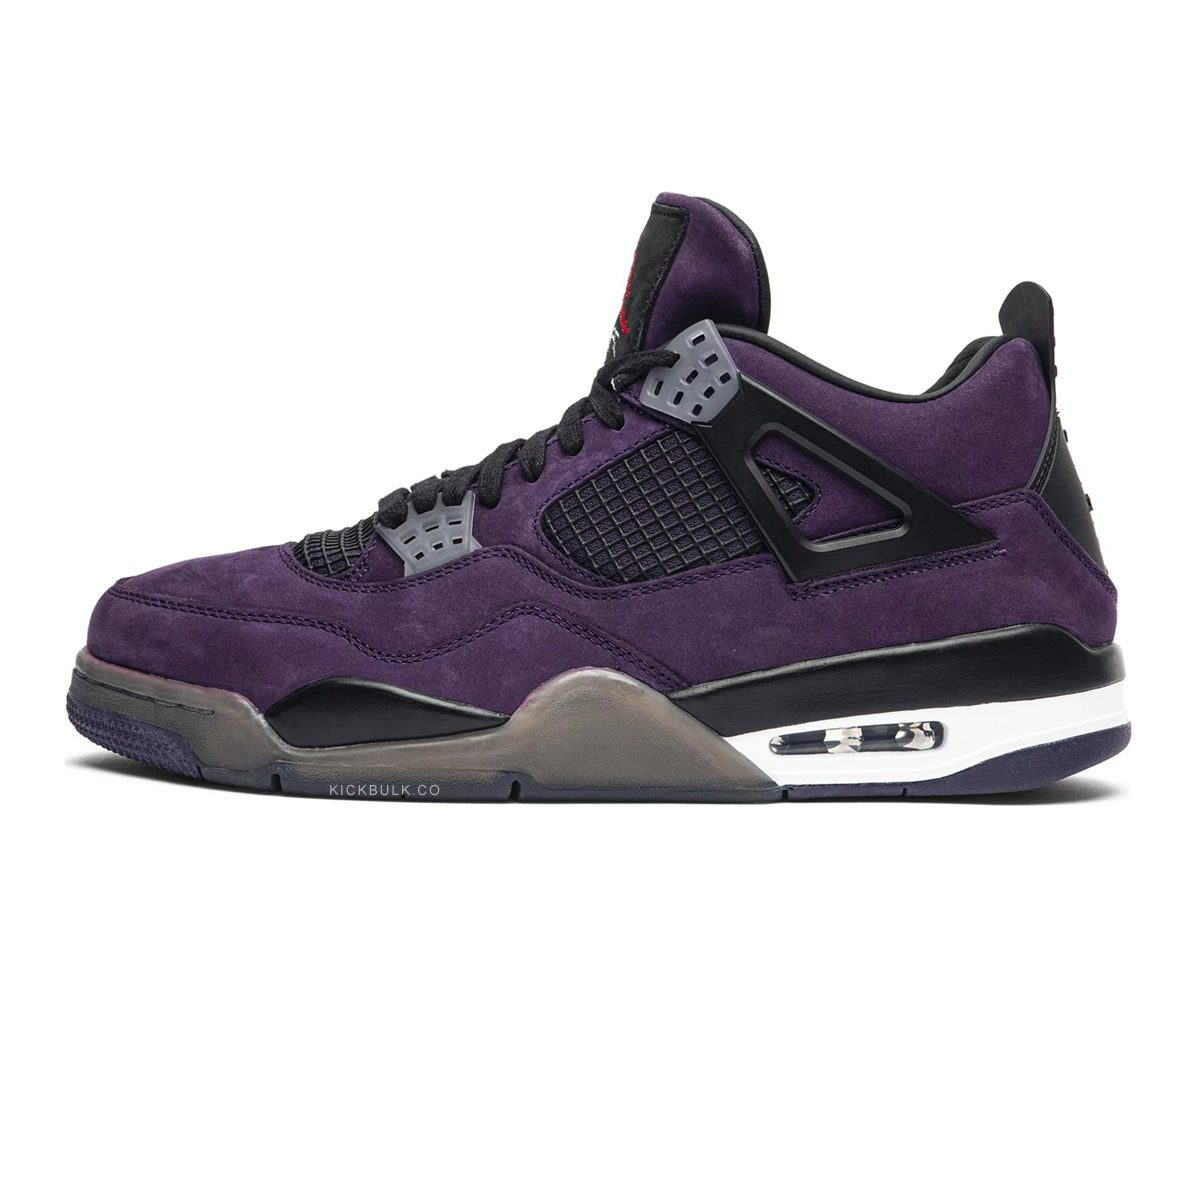 Travis Scott Air Jordan 4 Retro Purple Nike 766302 1 - www.kickbulk.co